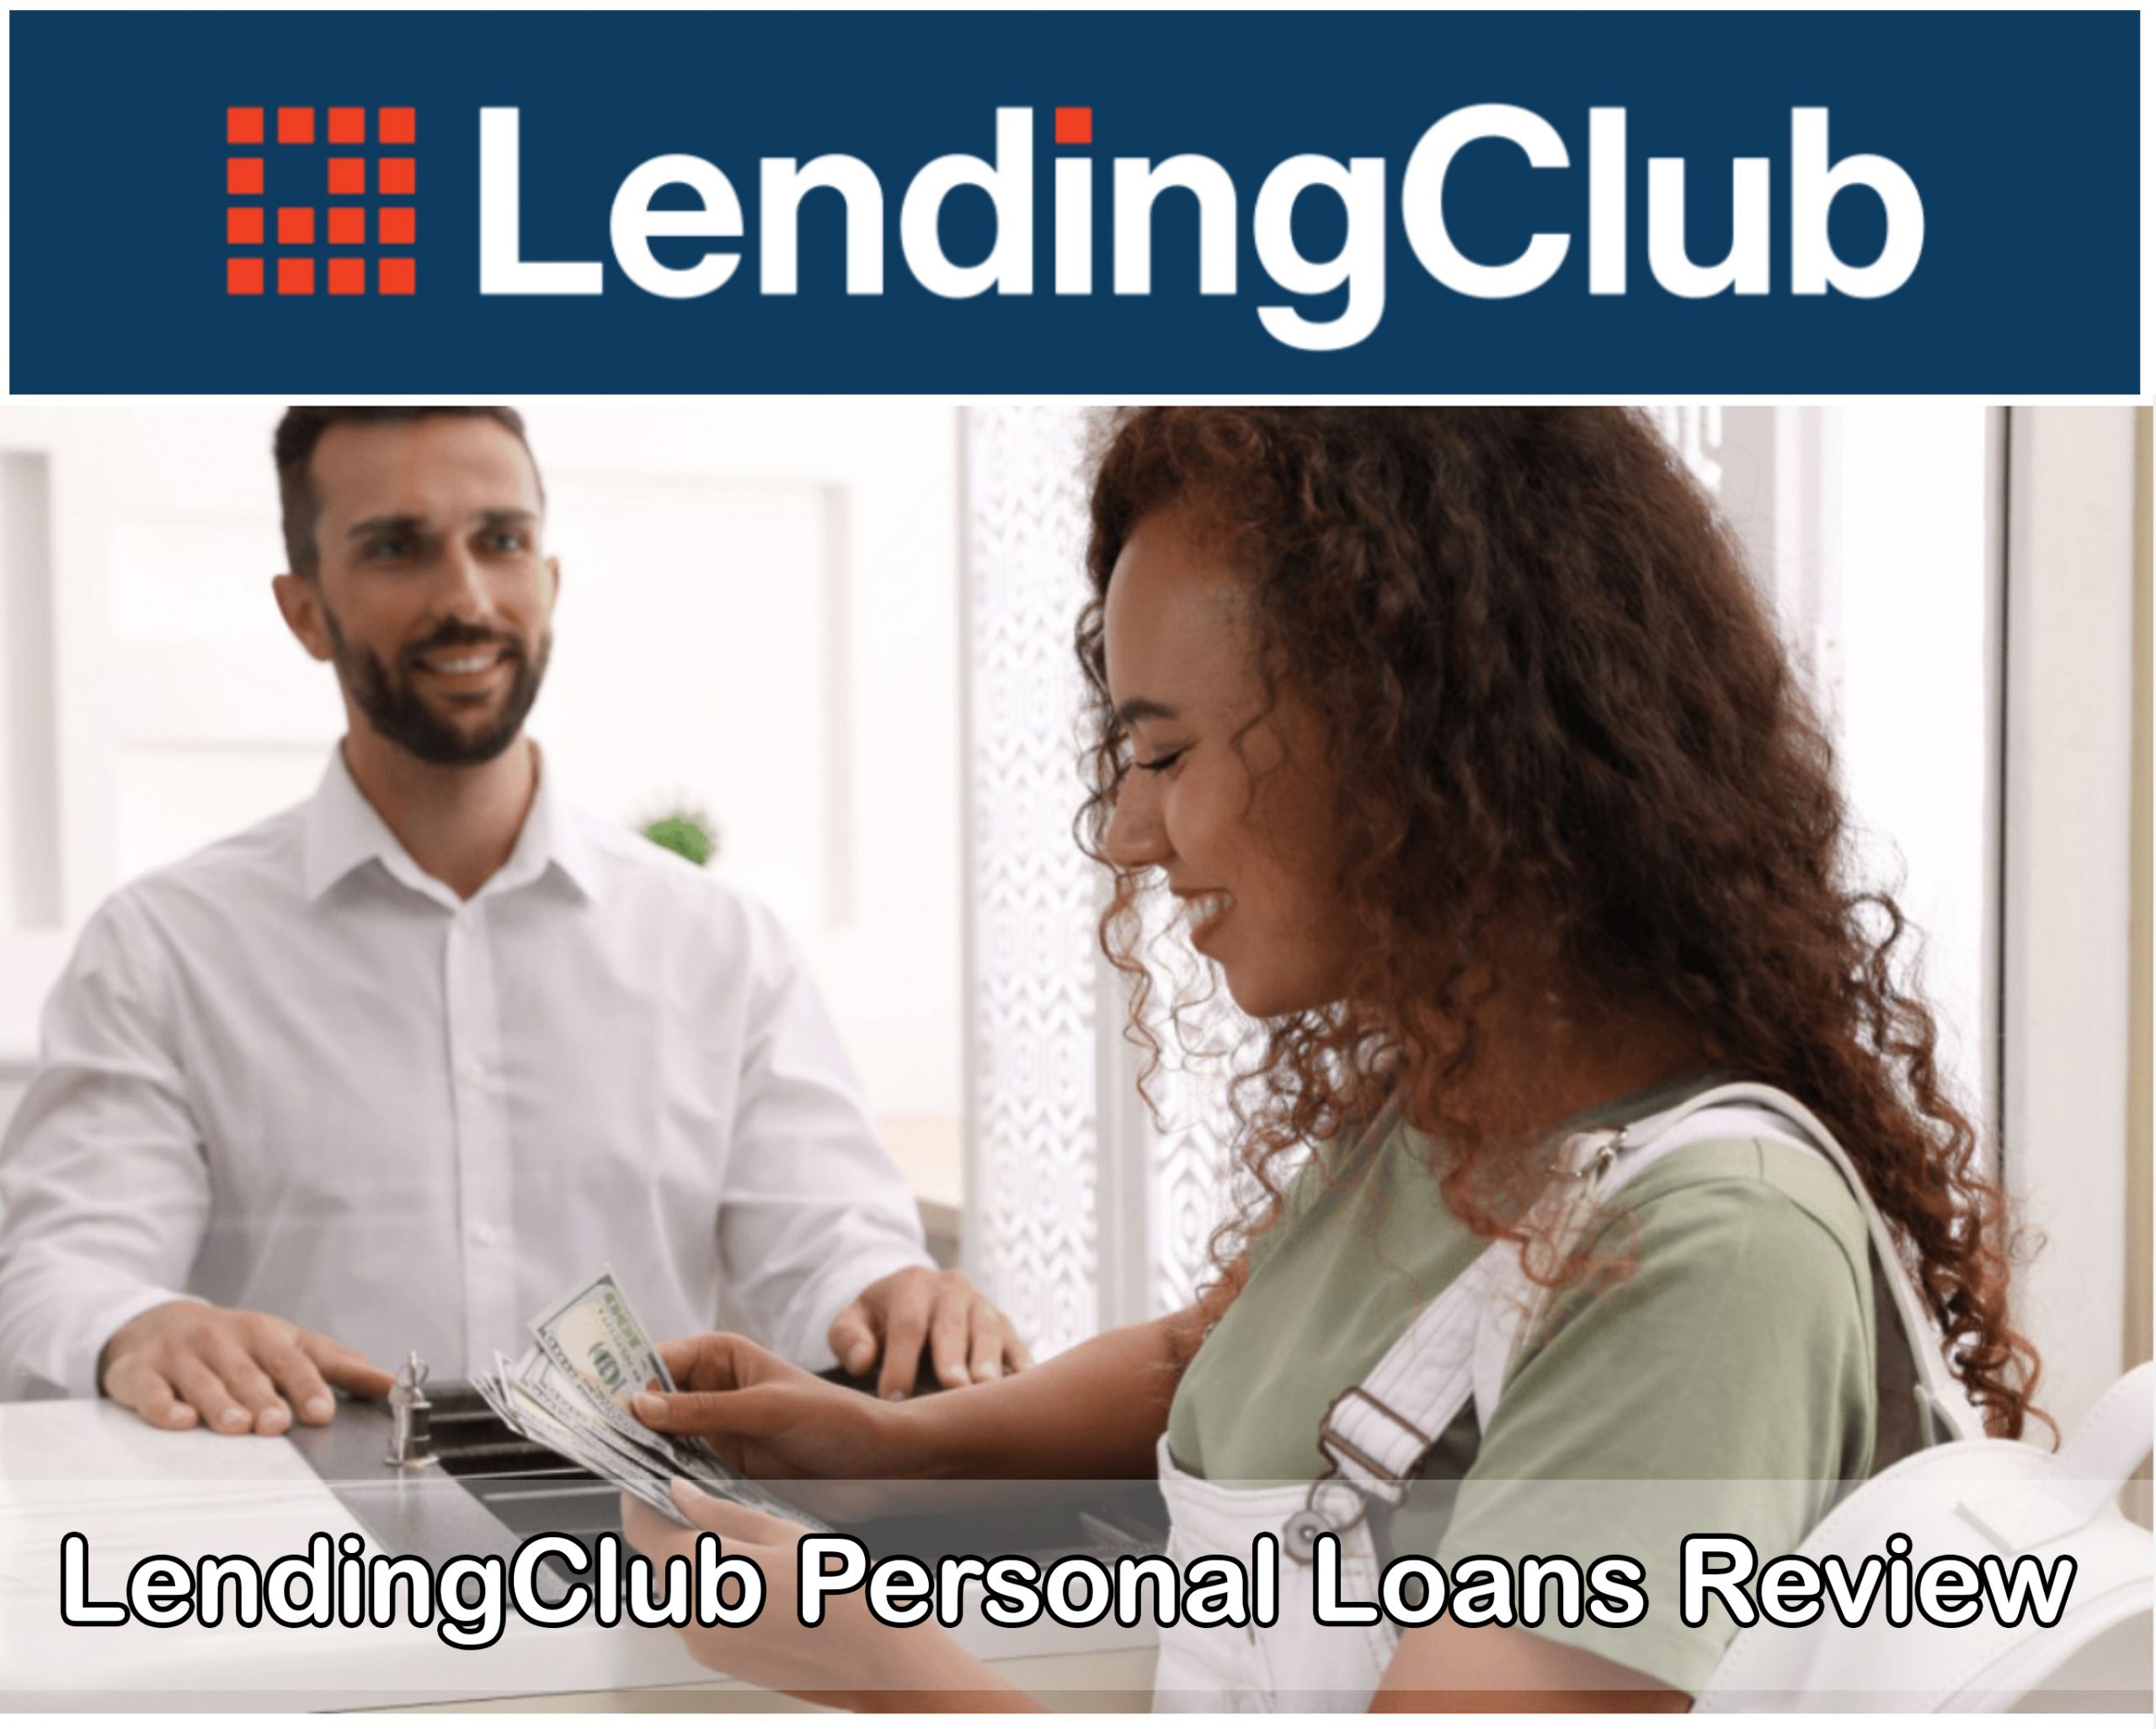 LendingClub Personal Loans Review